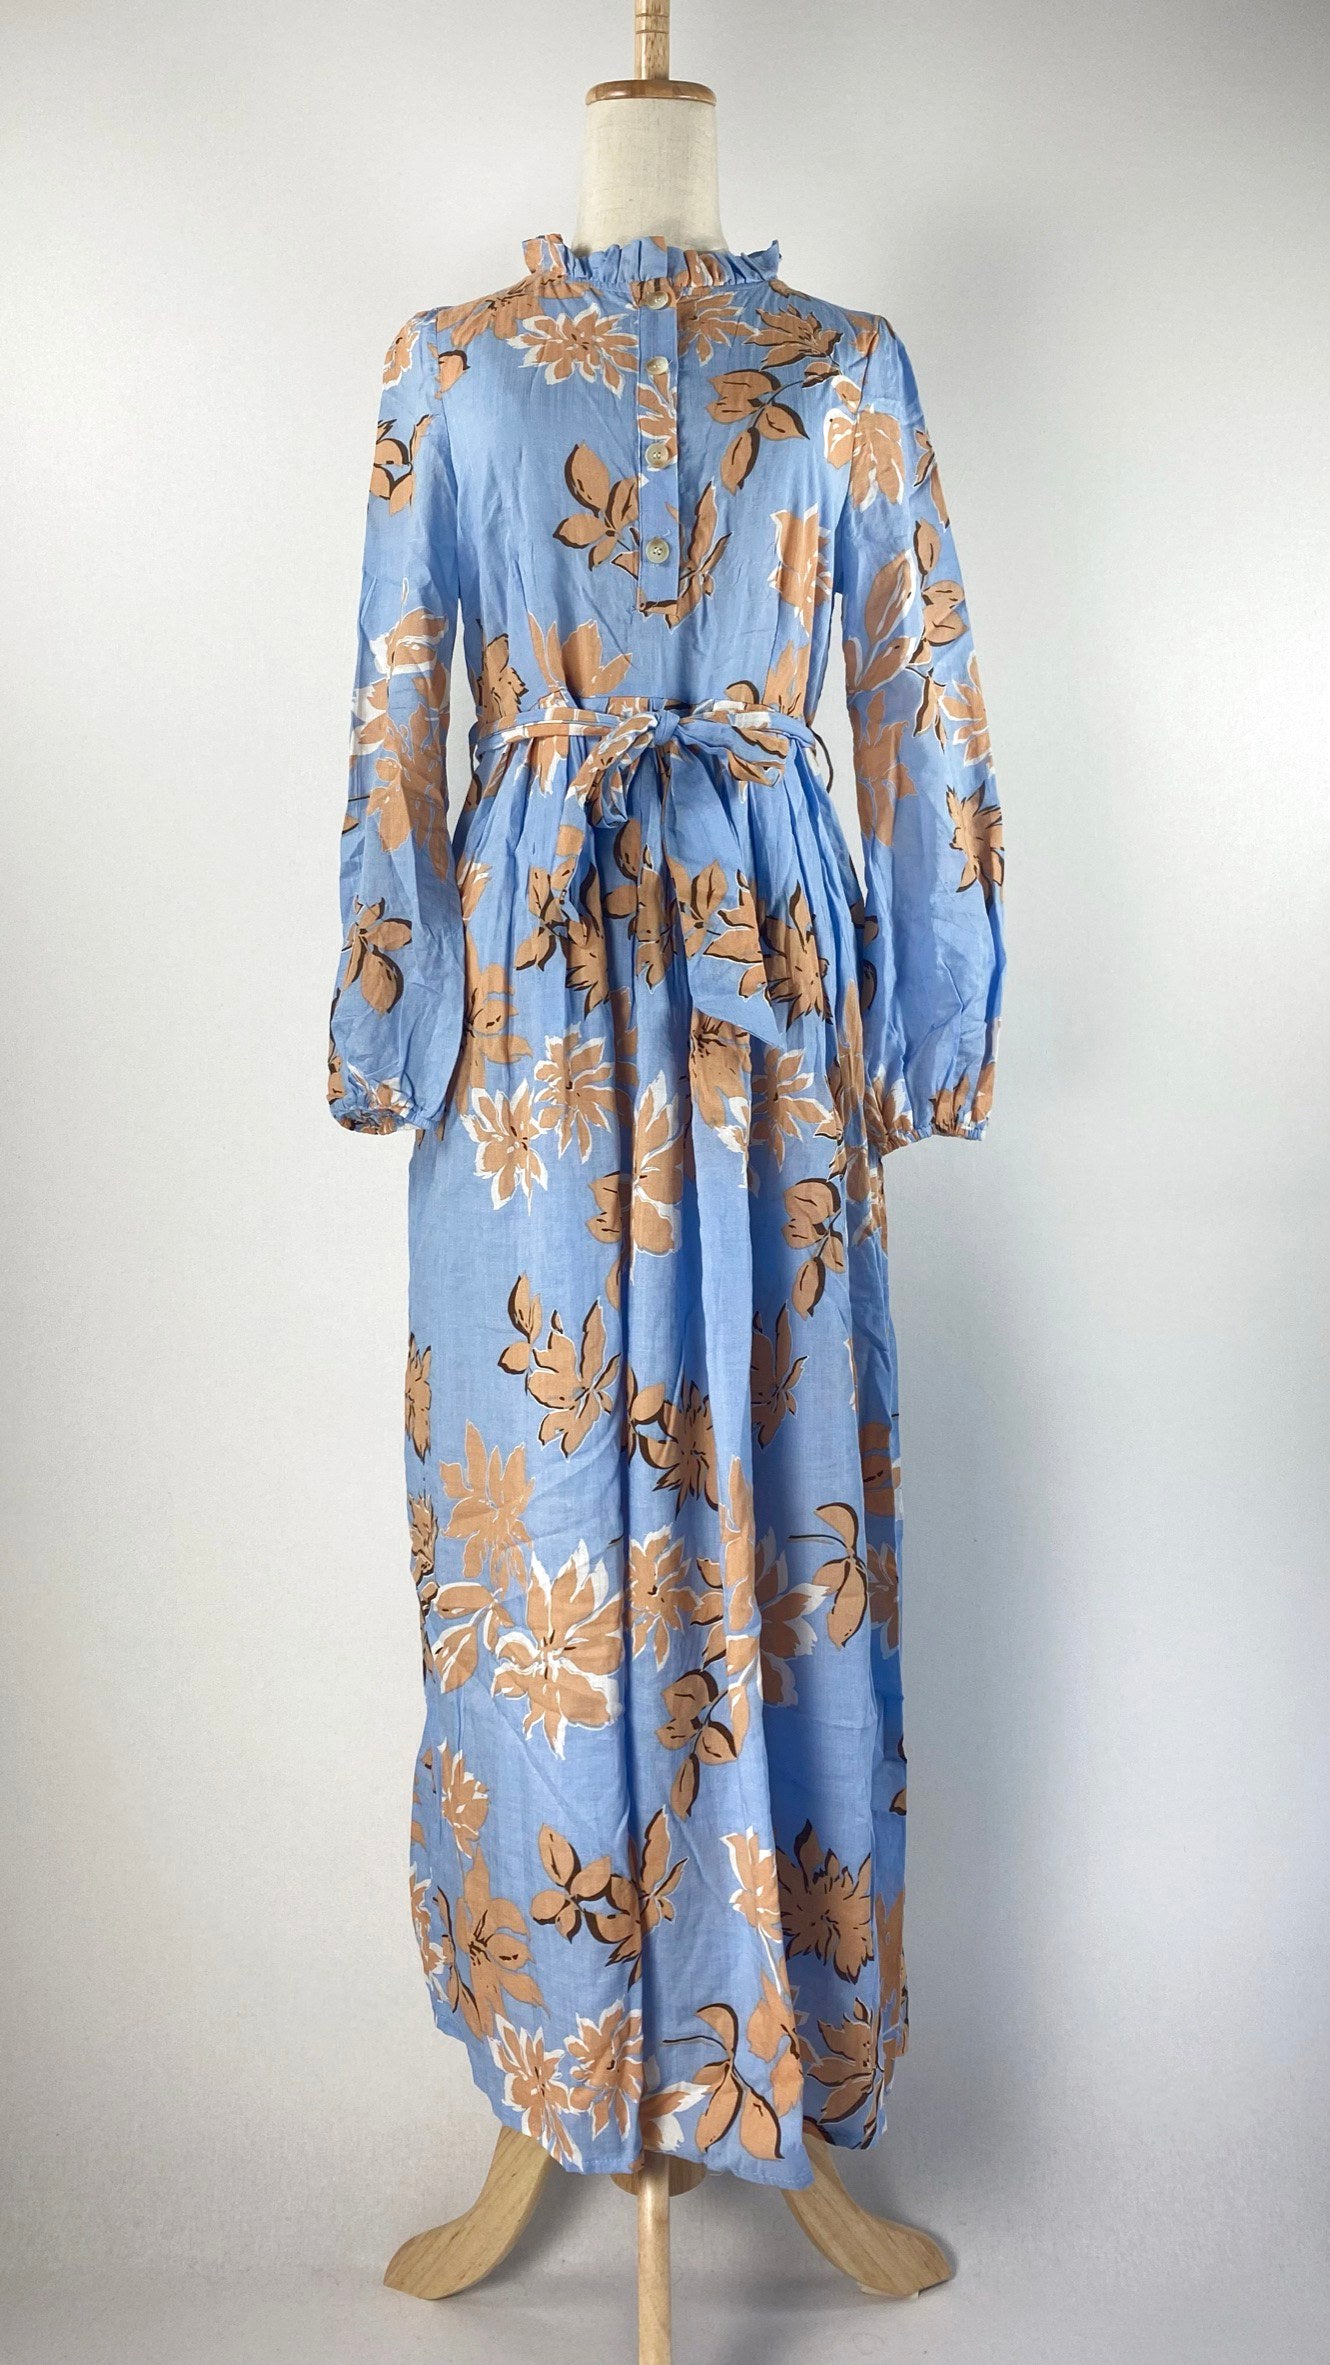 Long Sleeve Maxi Dress with Flower Print, Blue